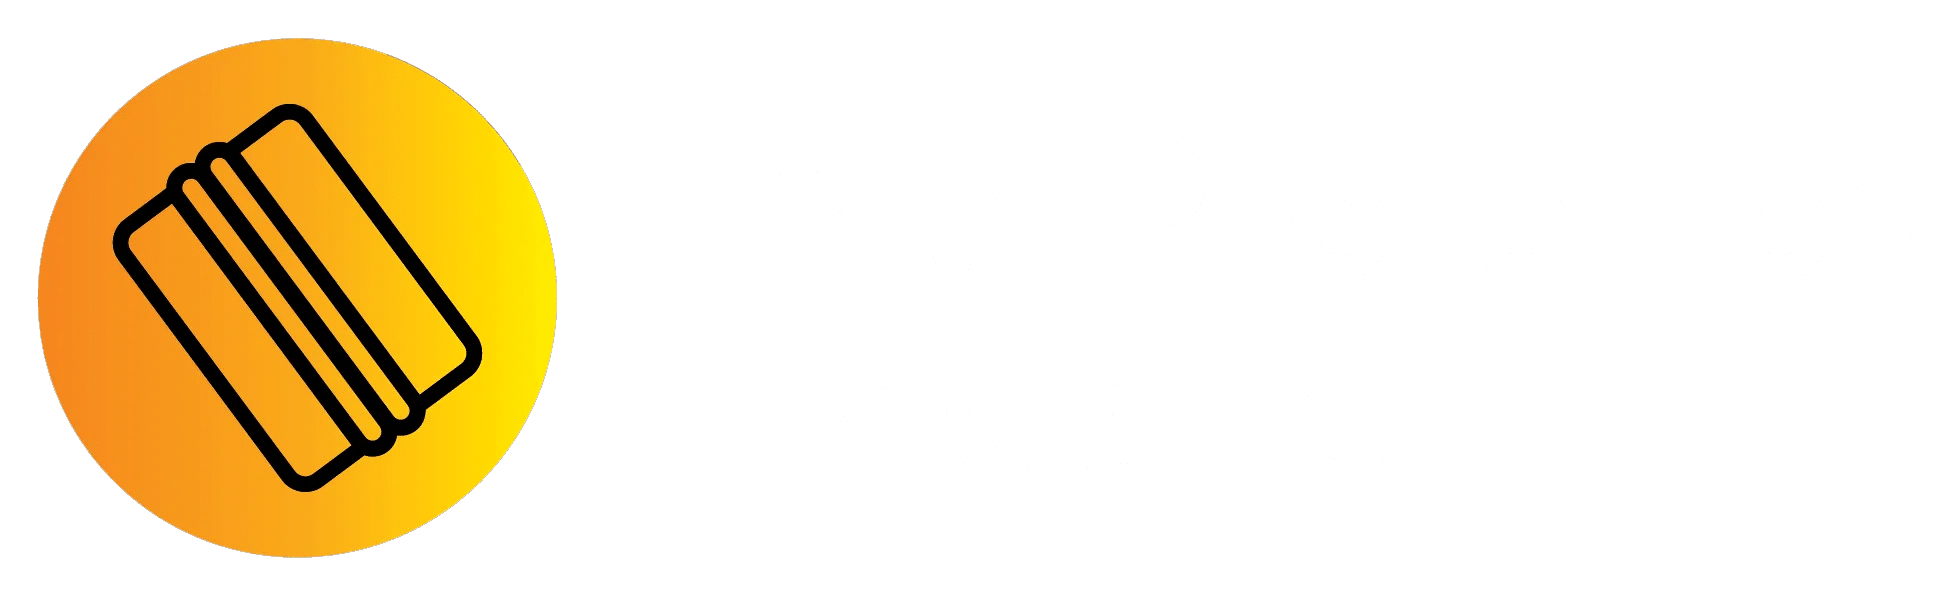 3M Preferred Installer